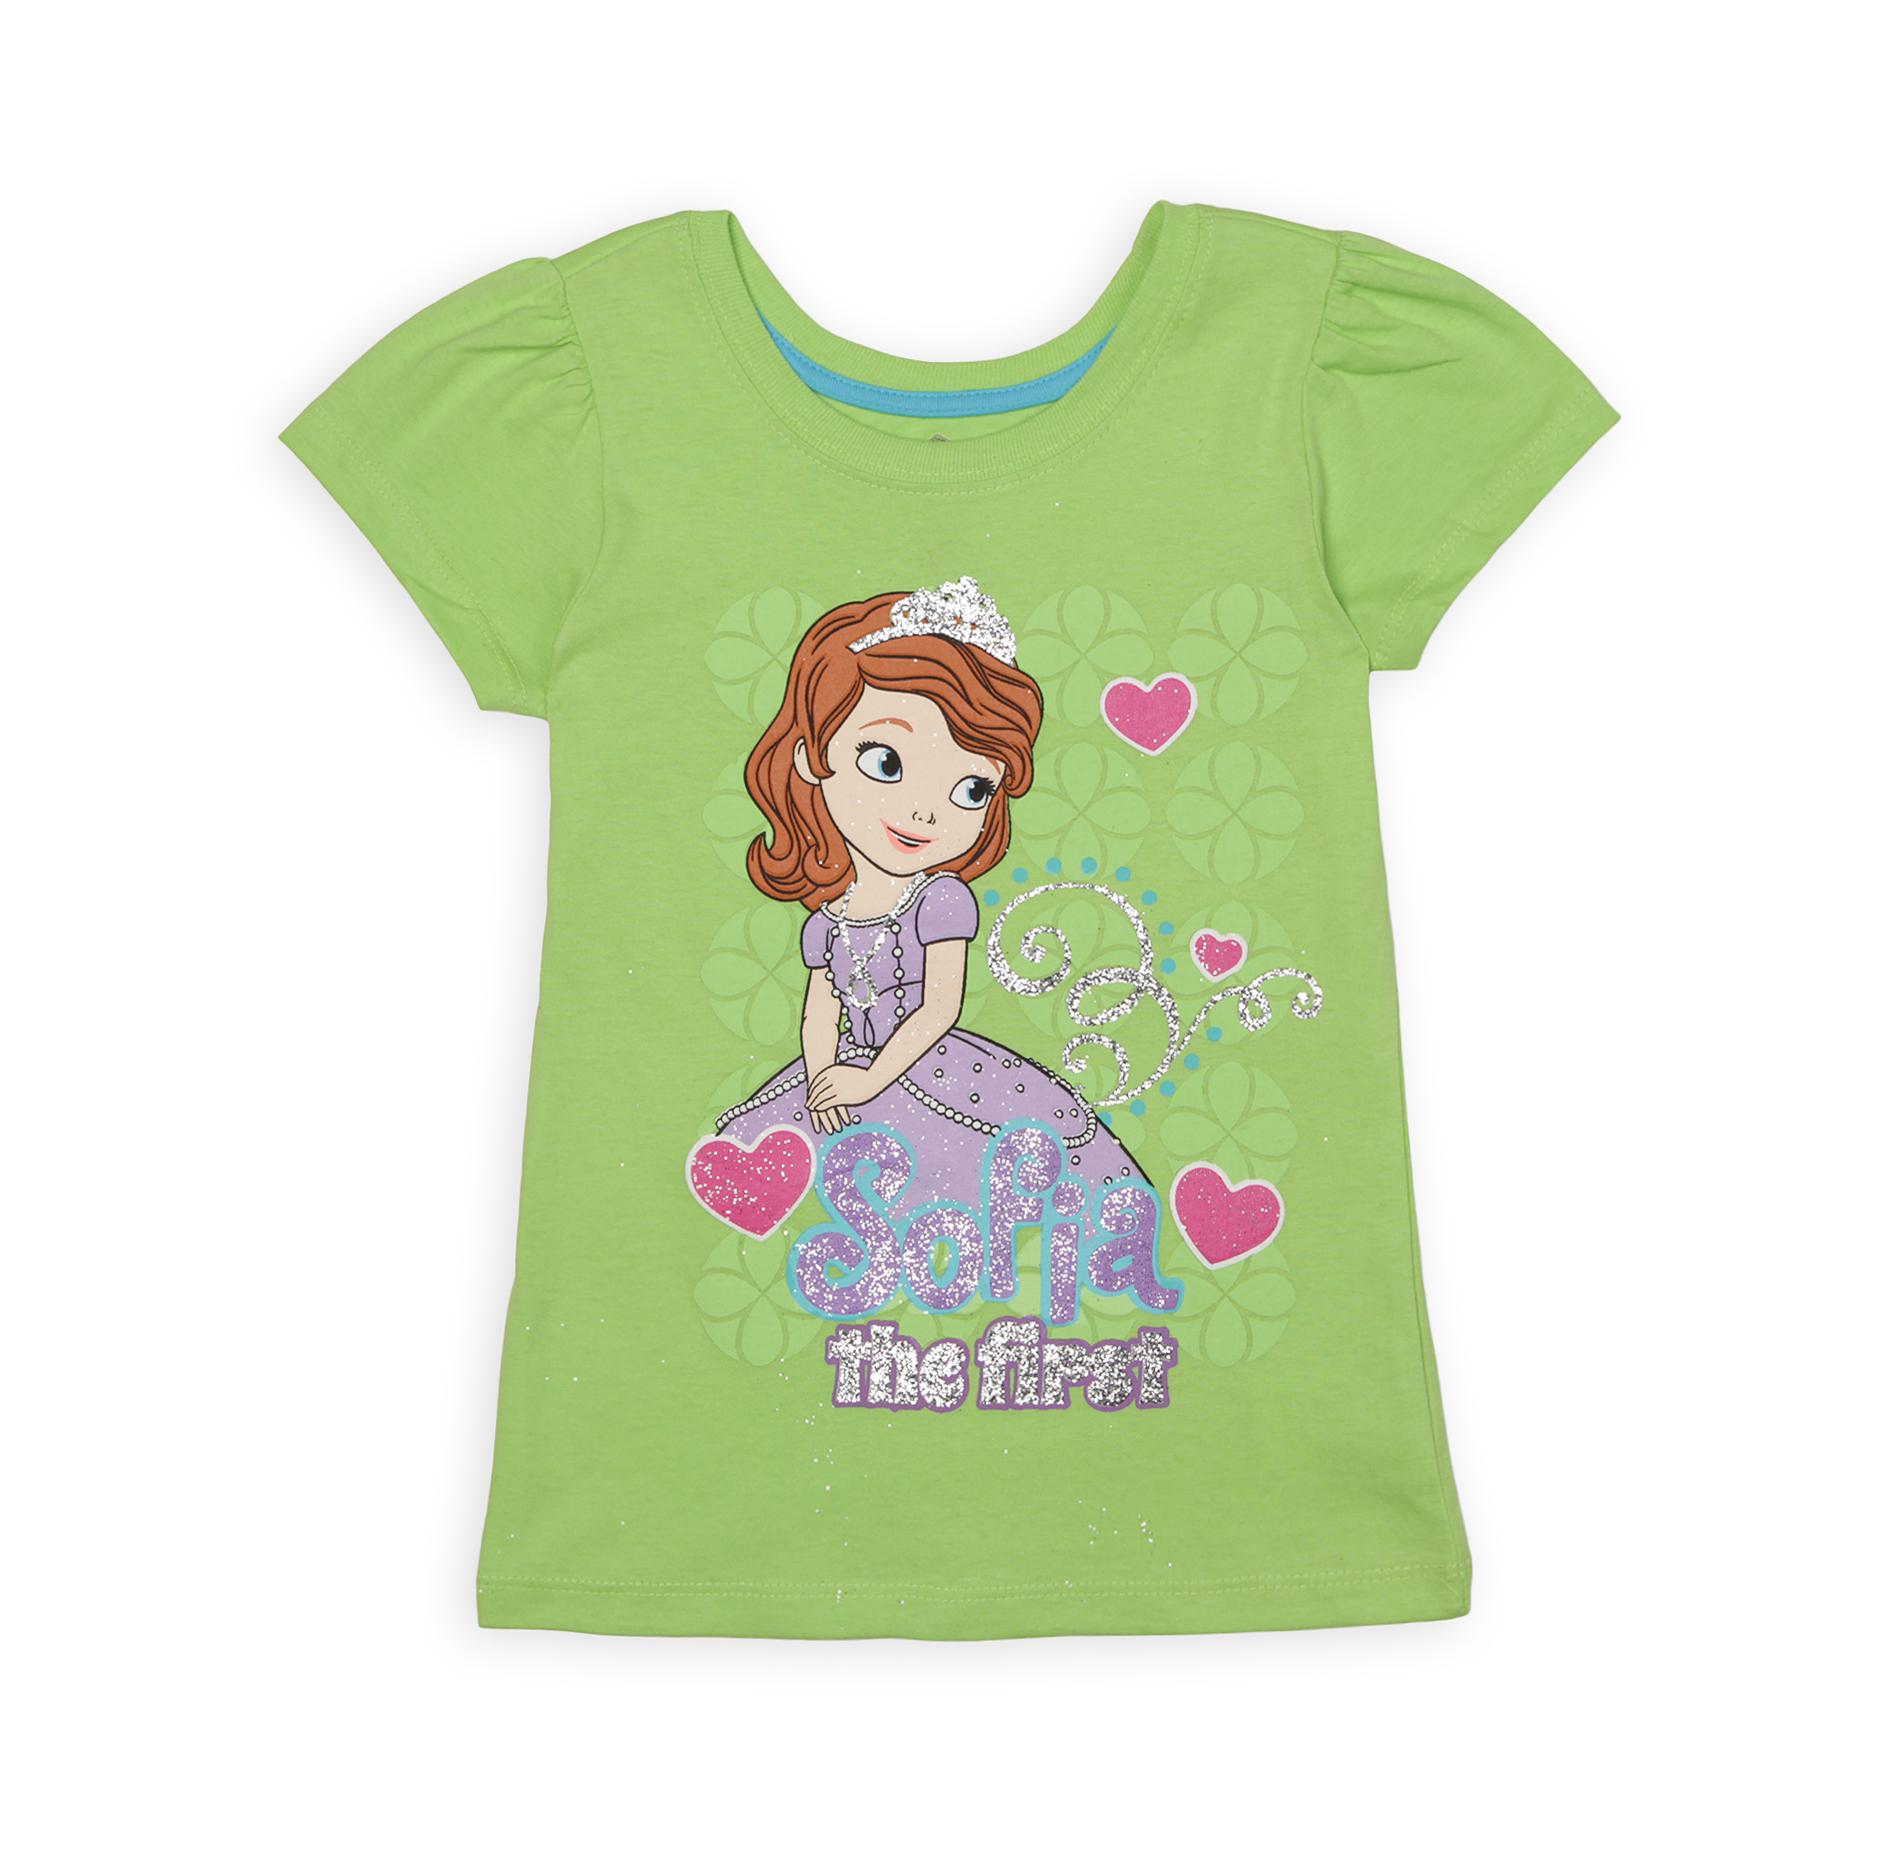 Disney Princess Girl's Graphic T-Shirt - Sofia The First